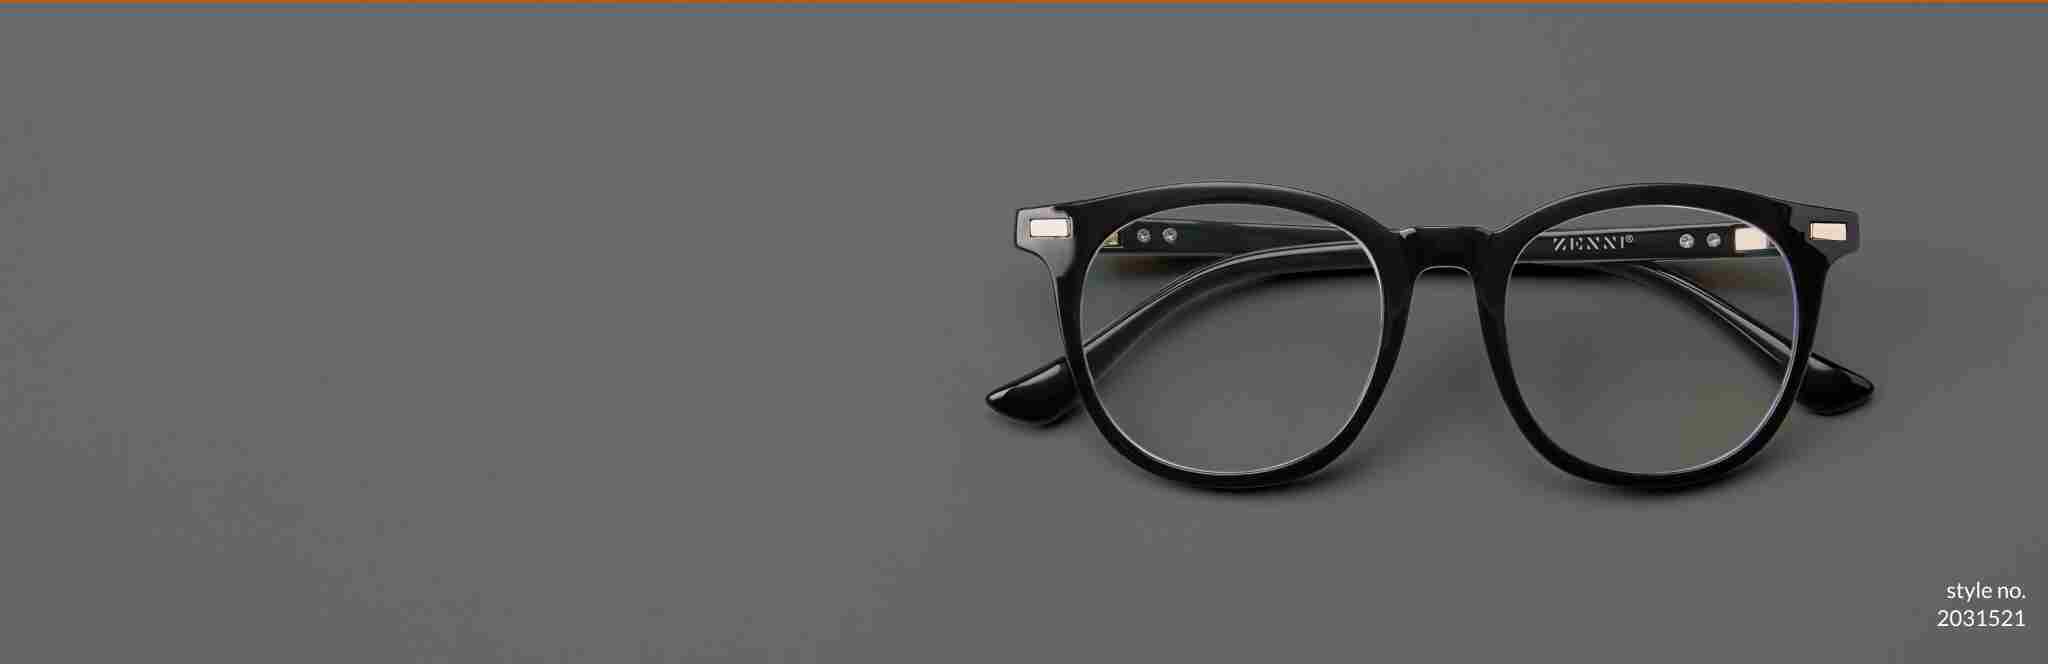 Image of Zenni black square glasses #2031521.